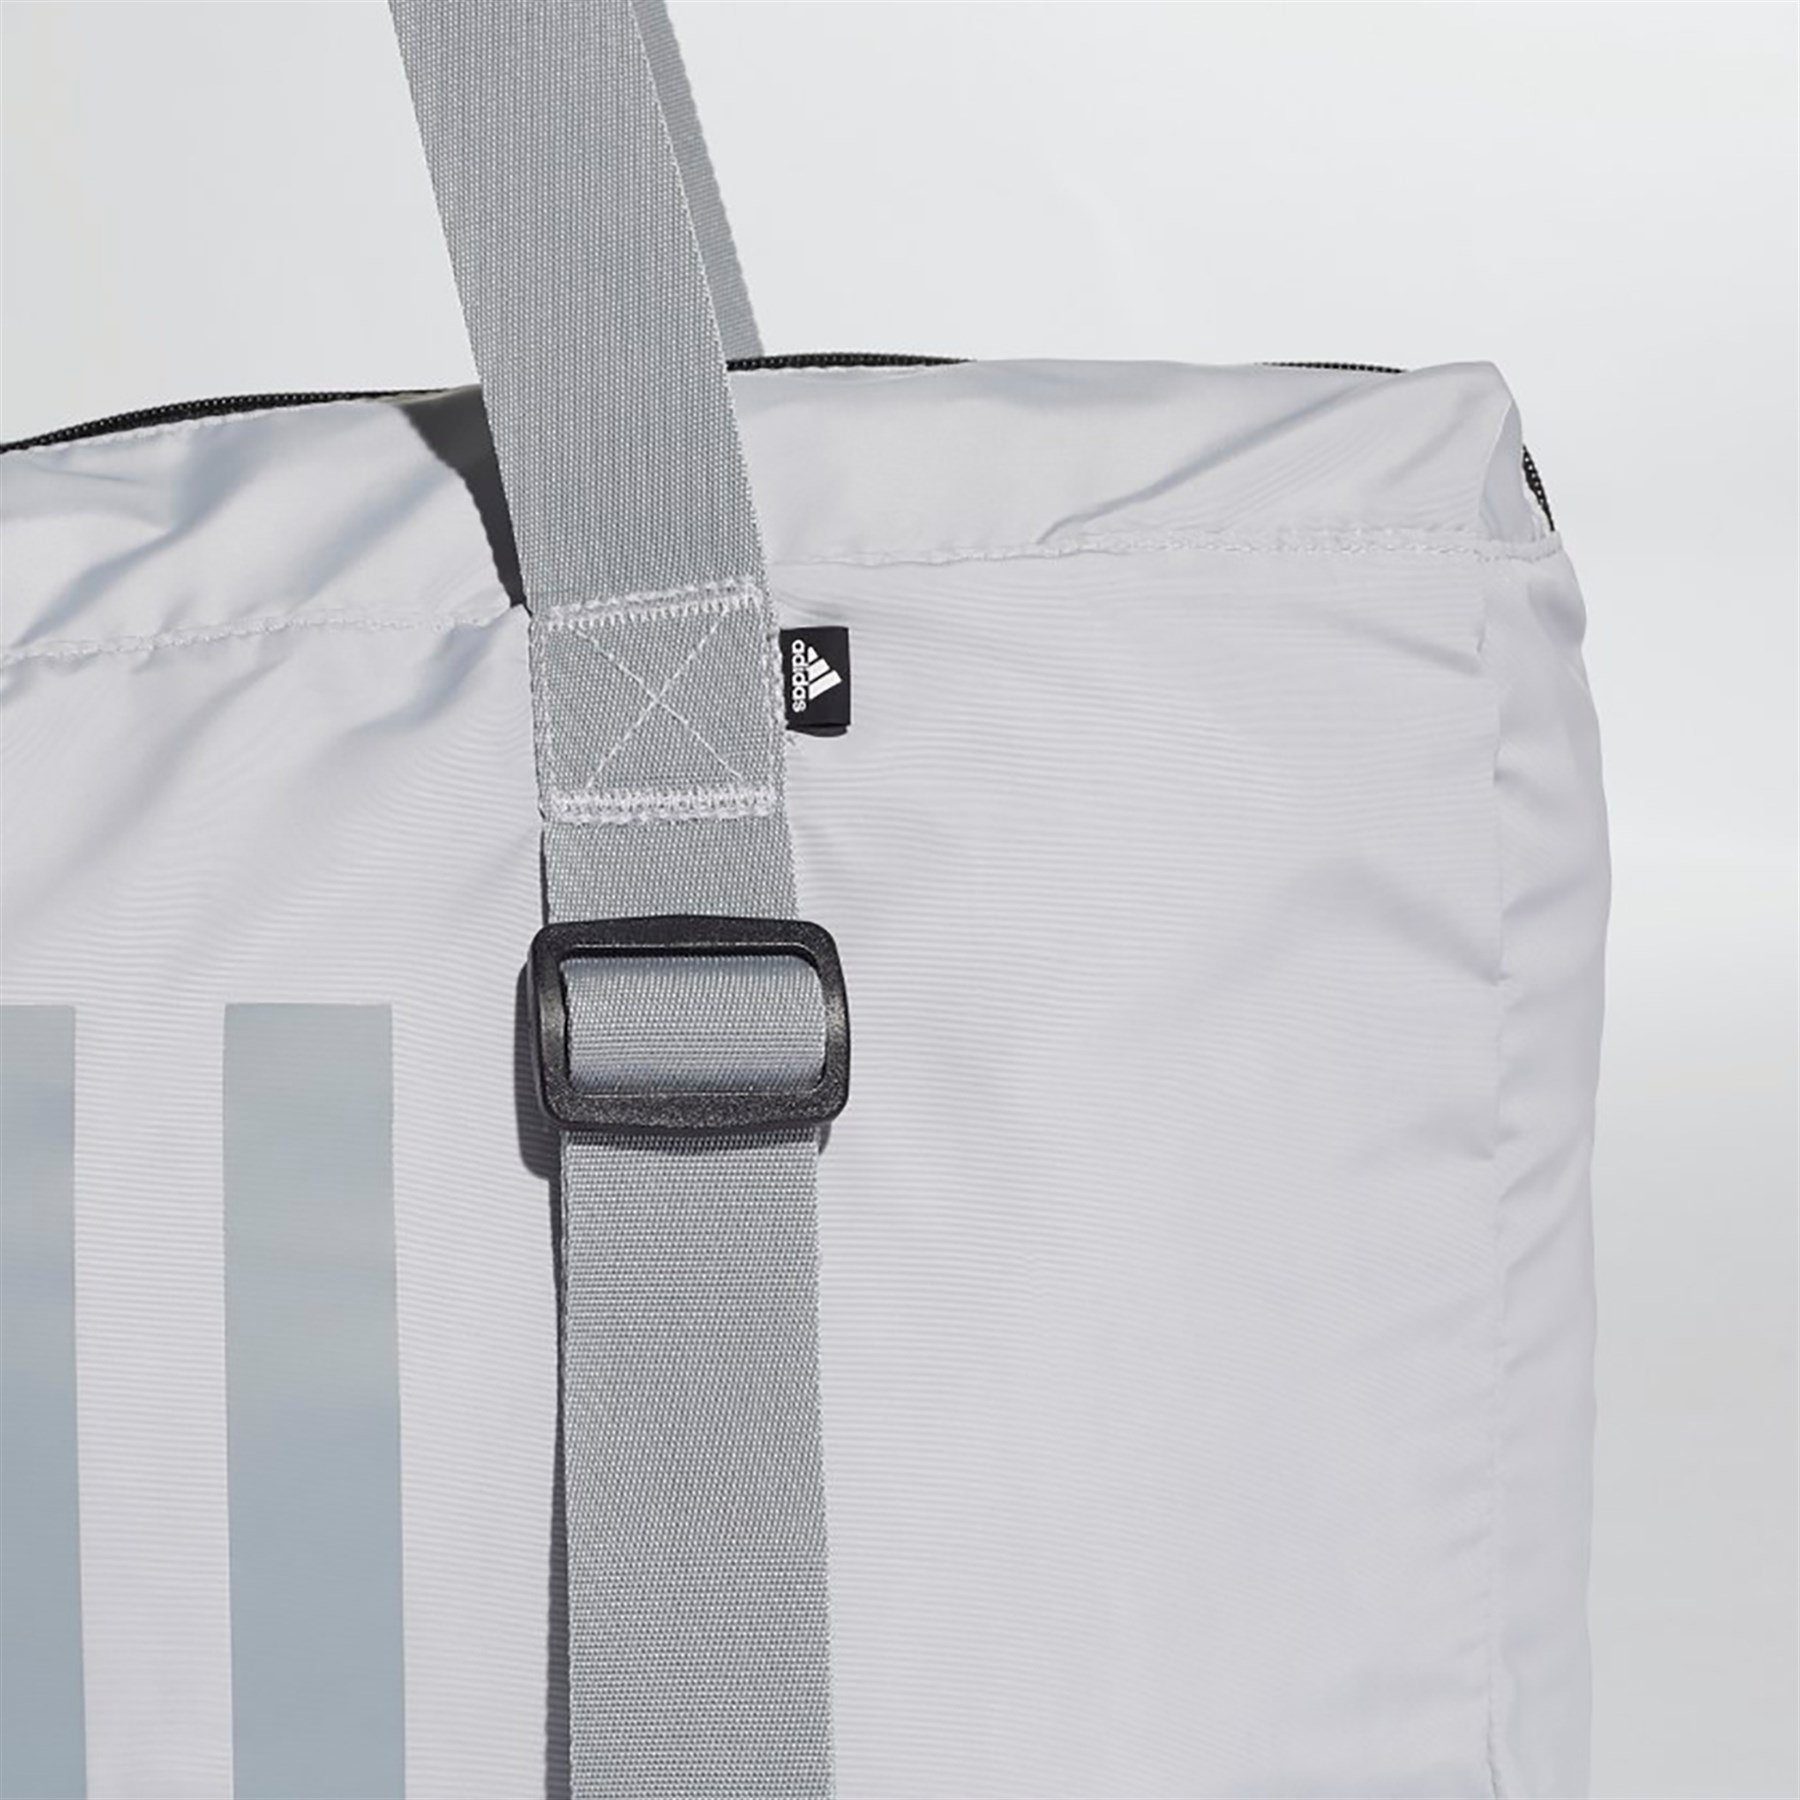 Carry adidas Originals Sporttasche Bag vom Adidas T4H